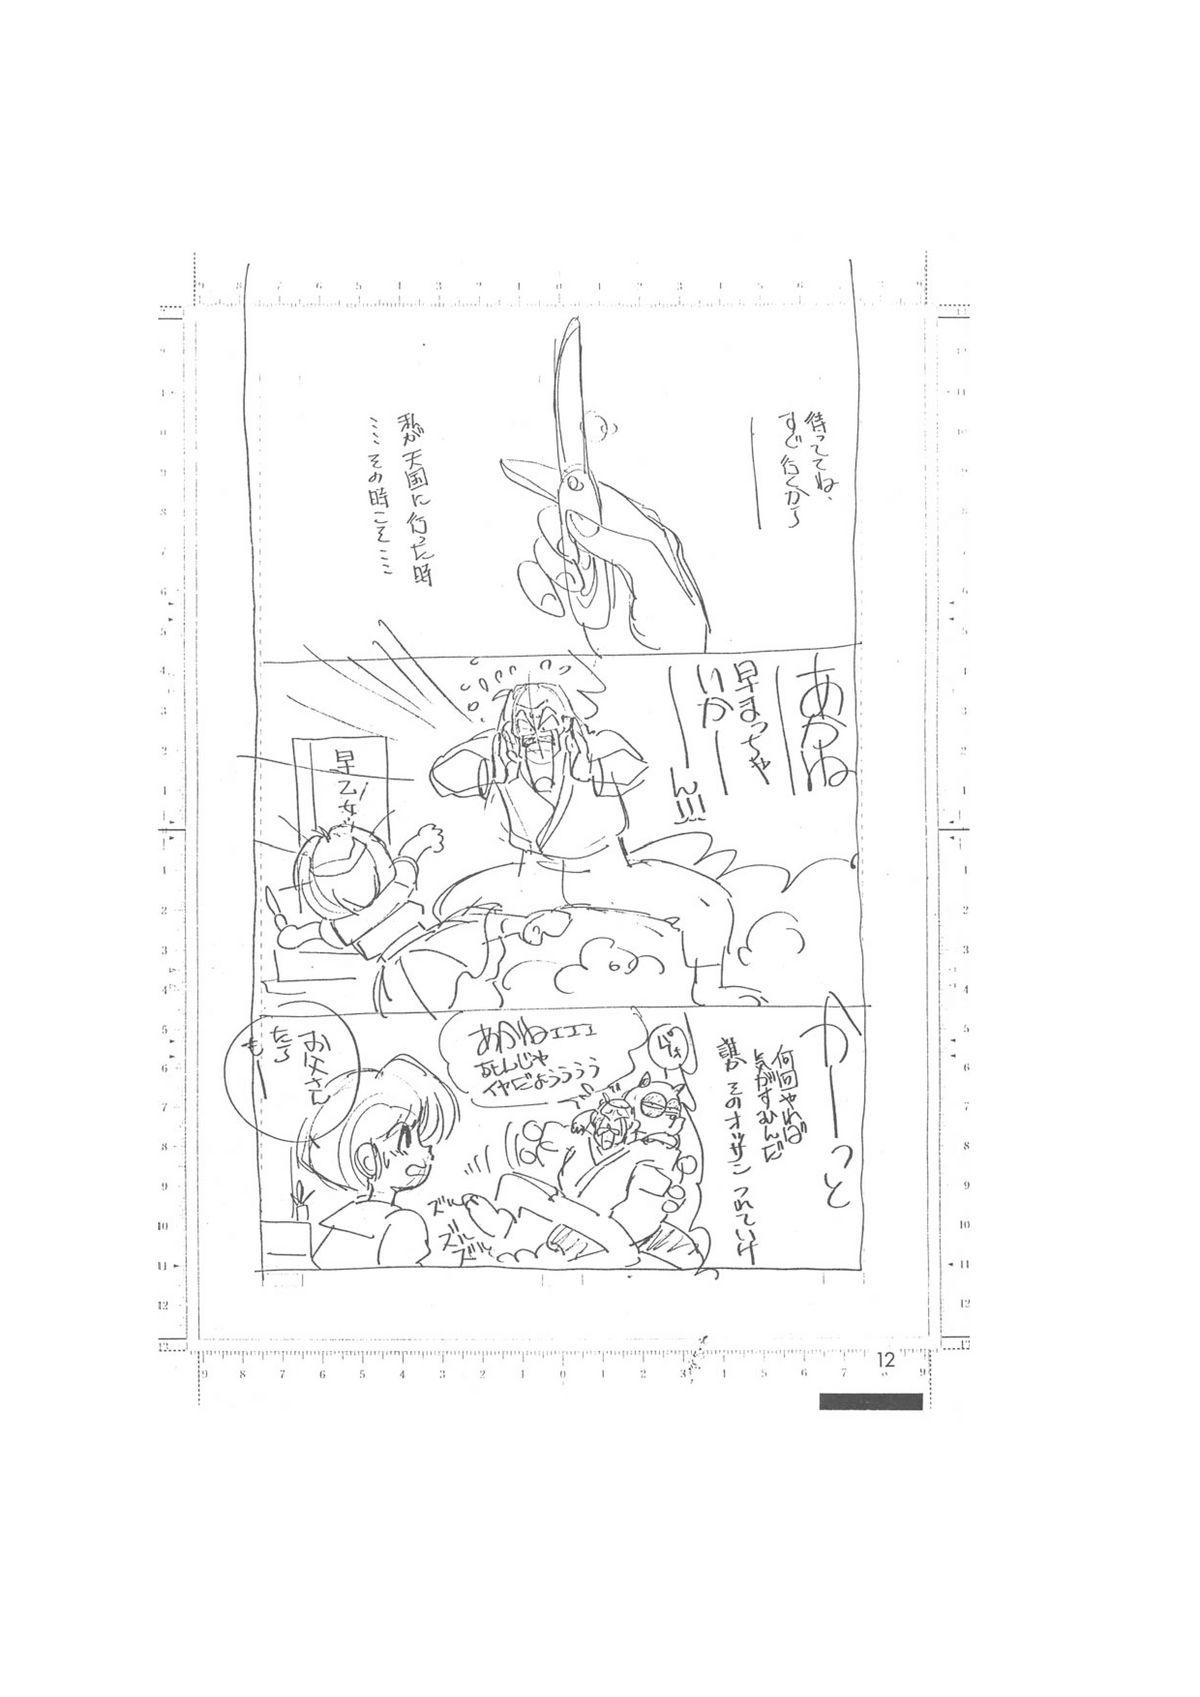 Asian Babes メイキング・オブ・『真・最悪的悲劇』 - A Ranma Doujin Sketch by Dark Zone - Ranma 12 Thot - Page 12